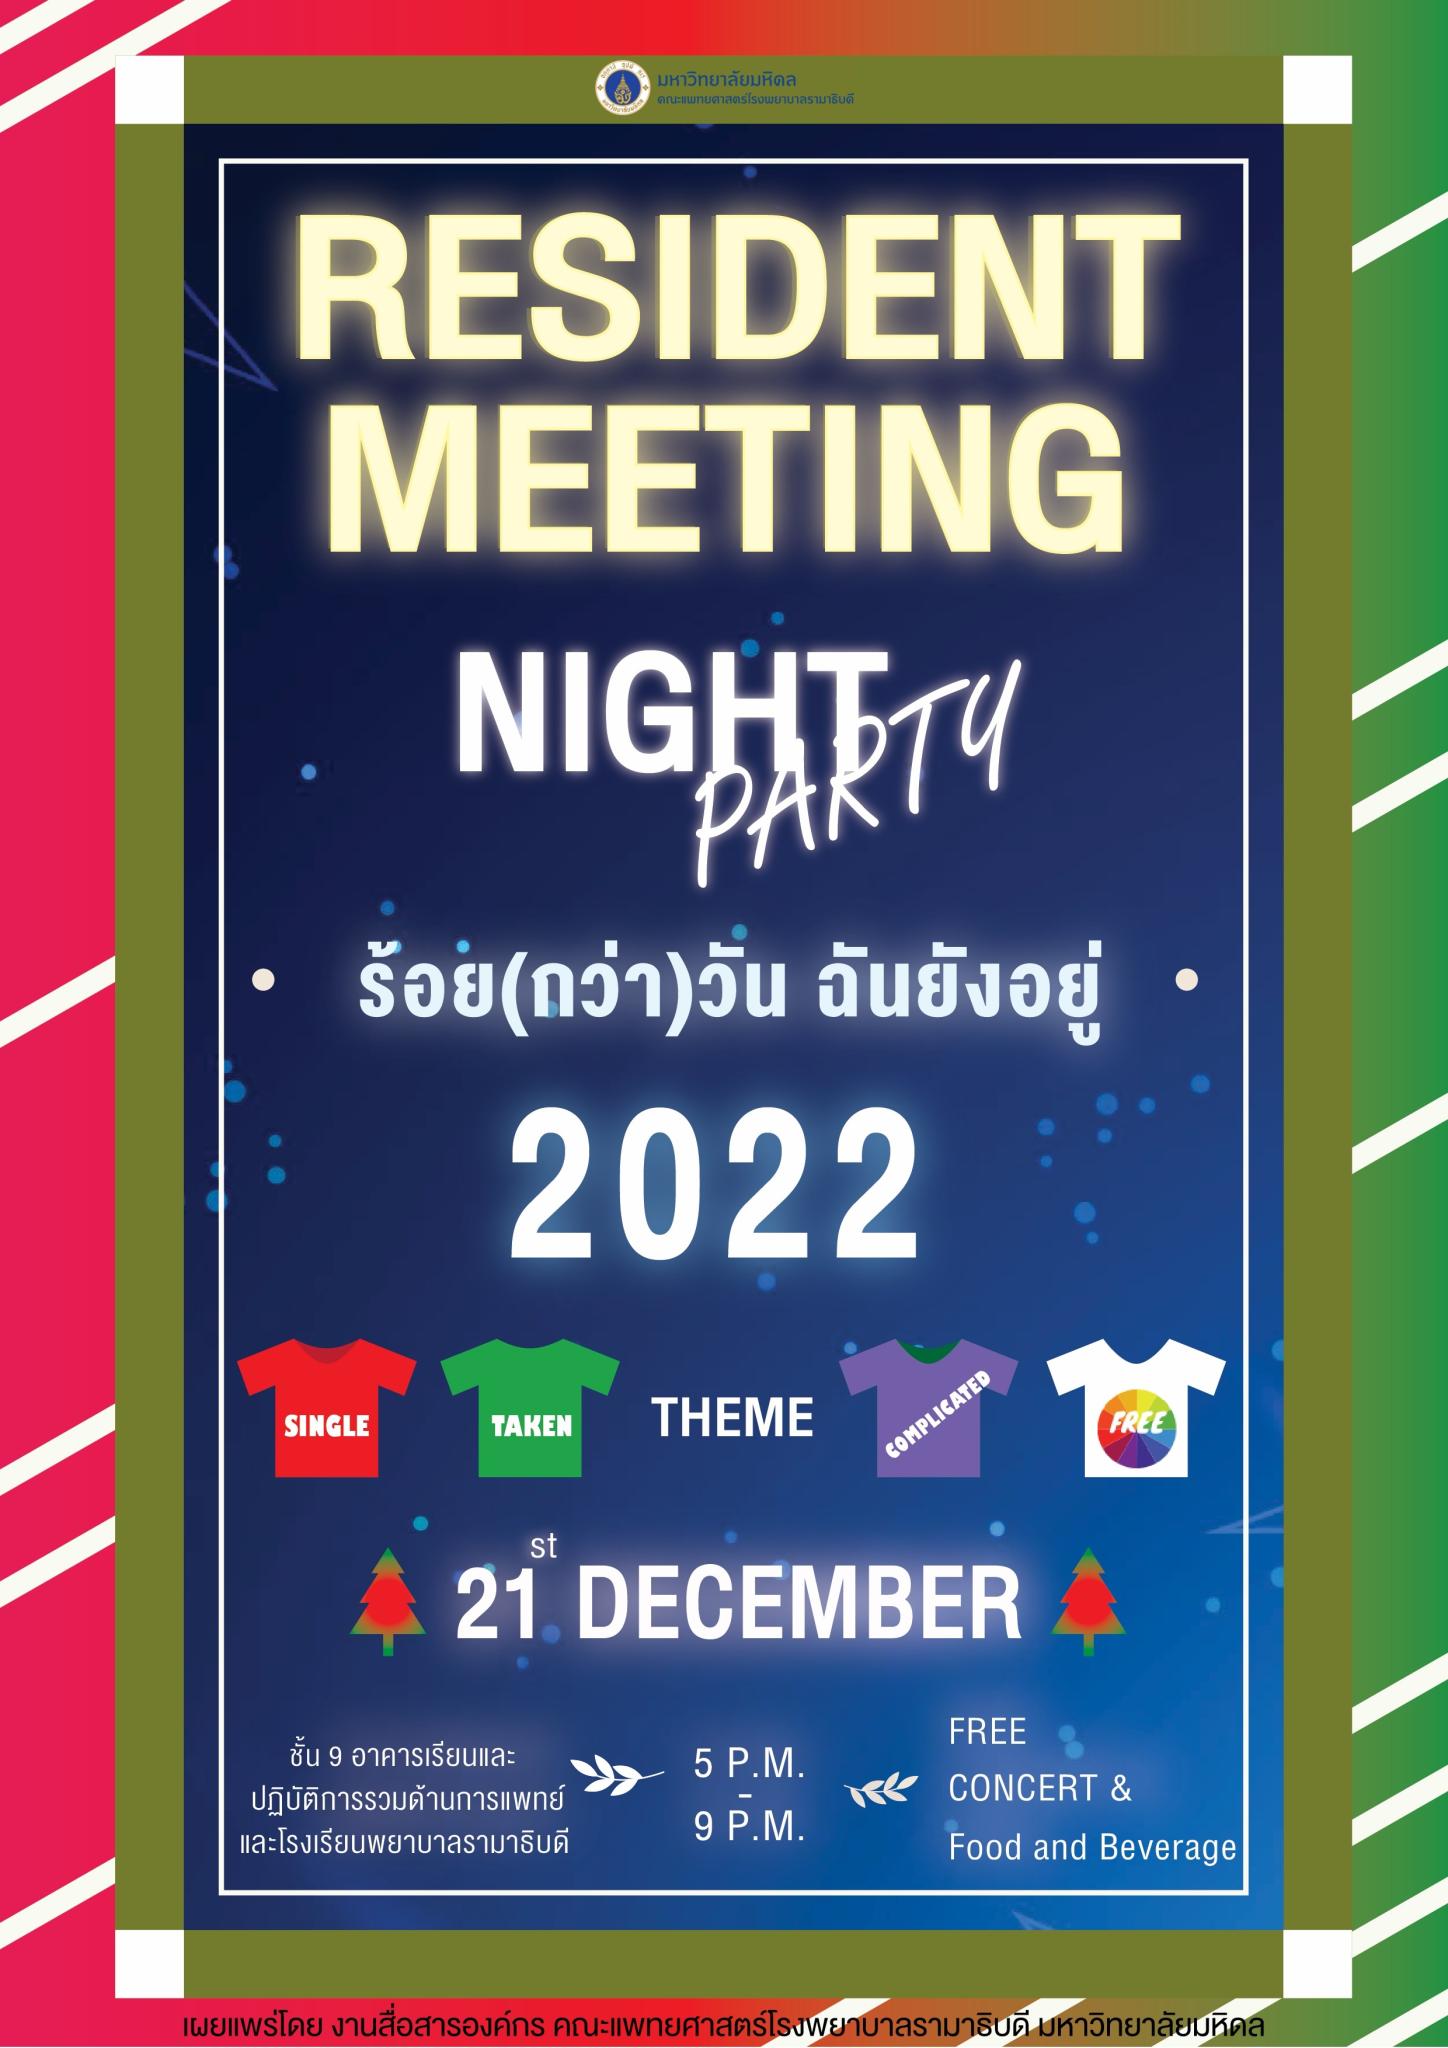 RESIDENT MEETING NIGHT PARTY 2022 ร้อย(กว่า)วัน ฉันยังอยู่